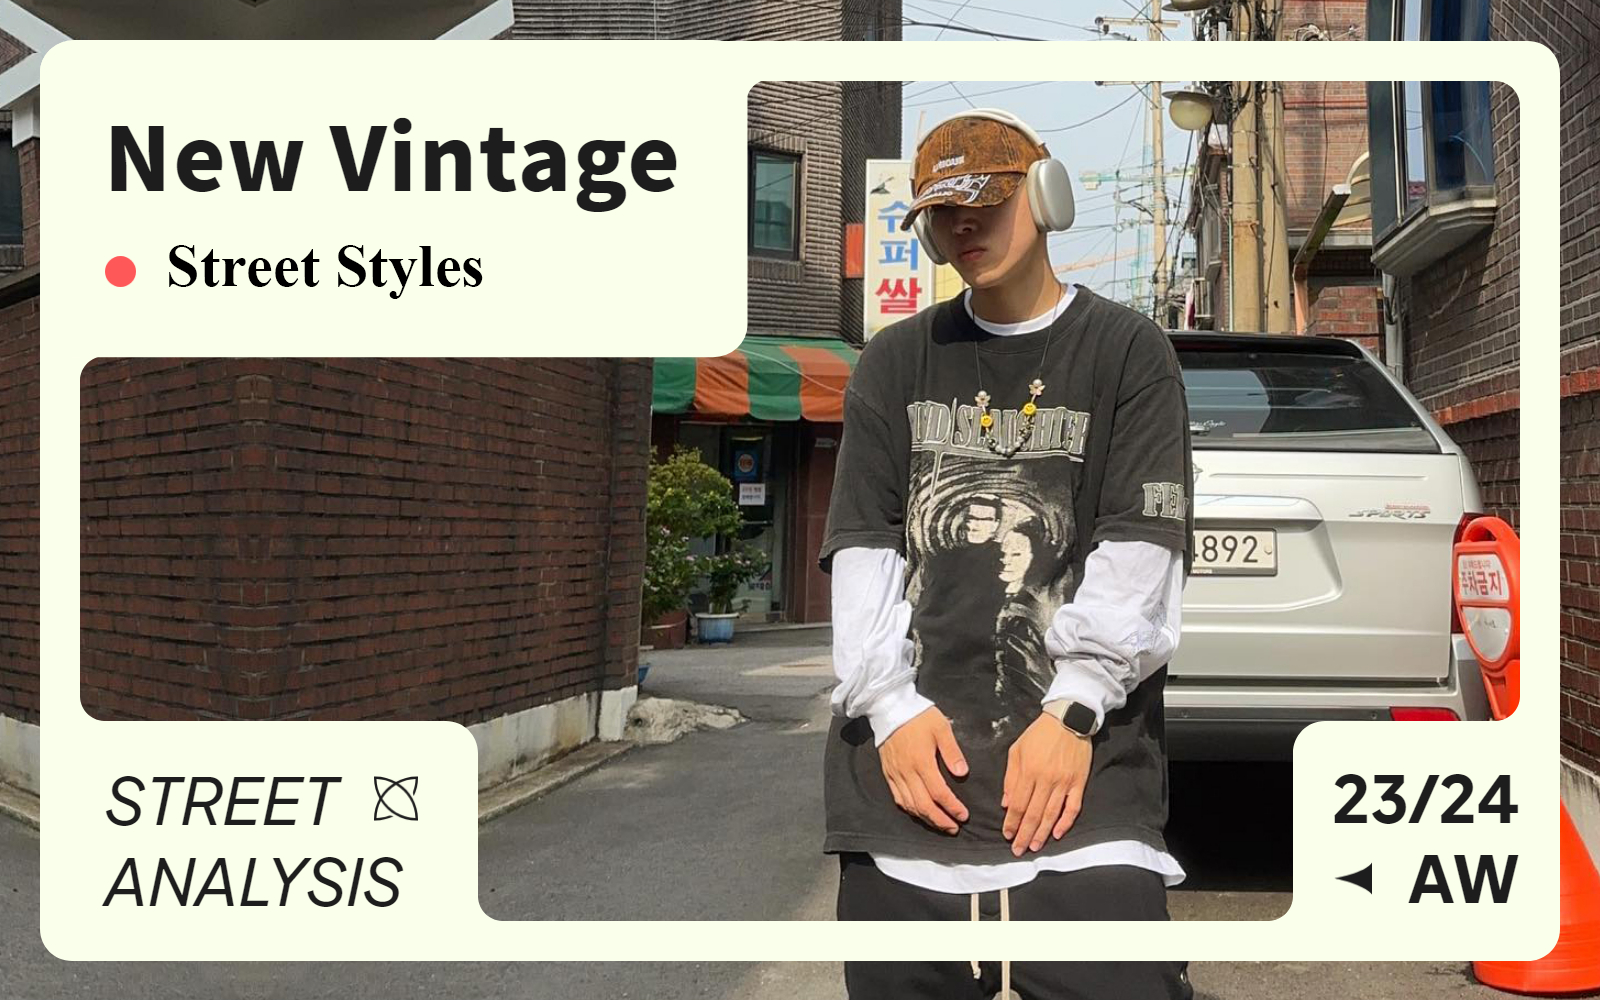 New Vintage -- The Analysis of Men's Street Styles